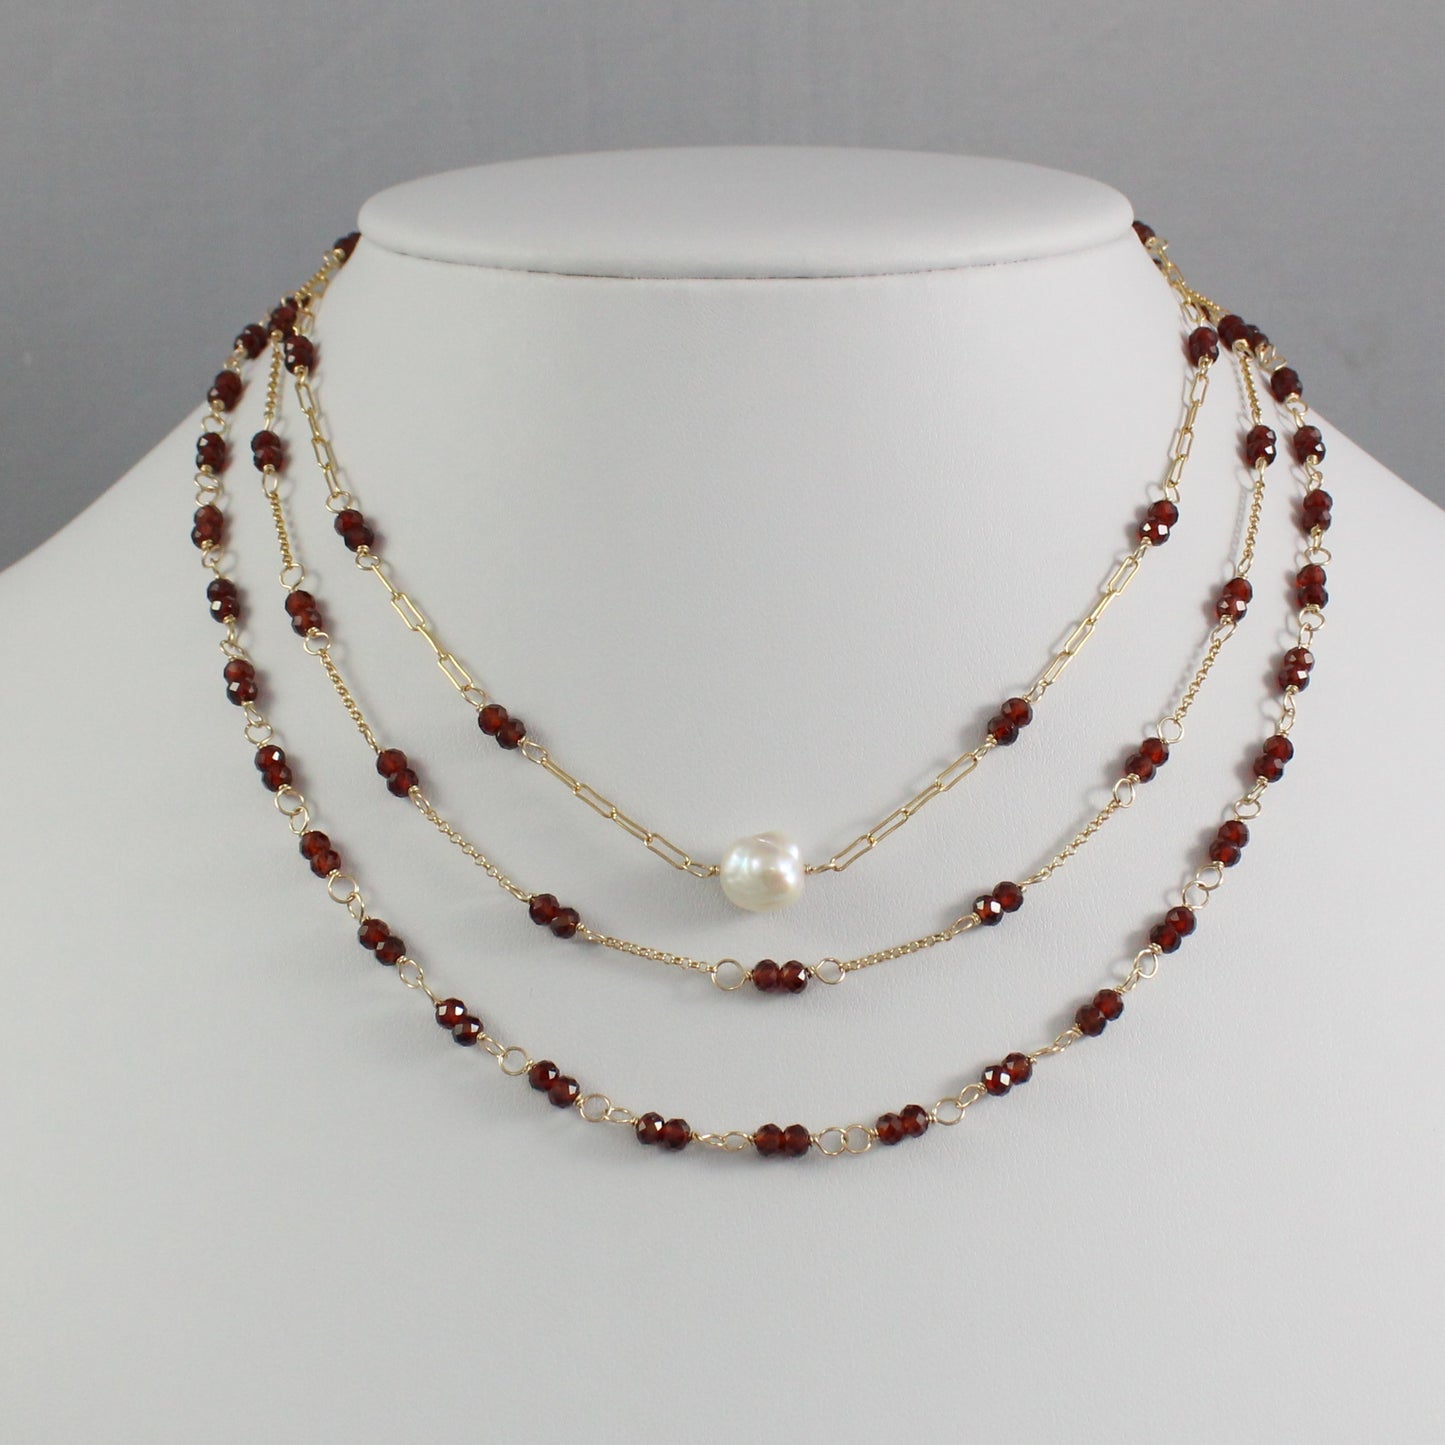 Mozambique Garnet Gemstone Necklace - Mary